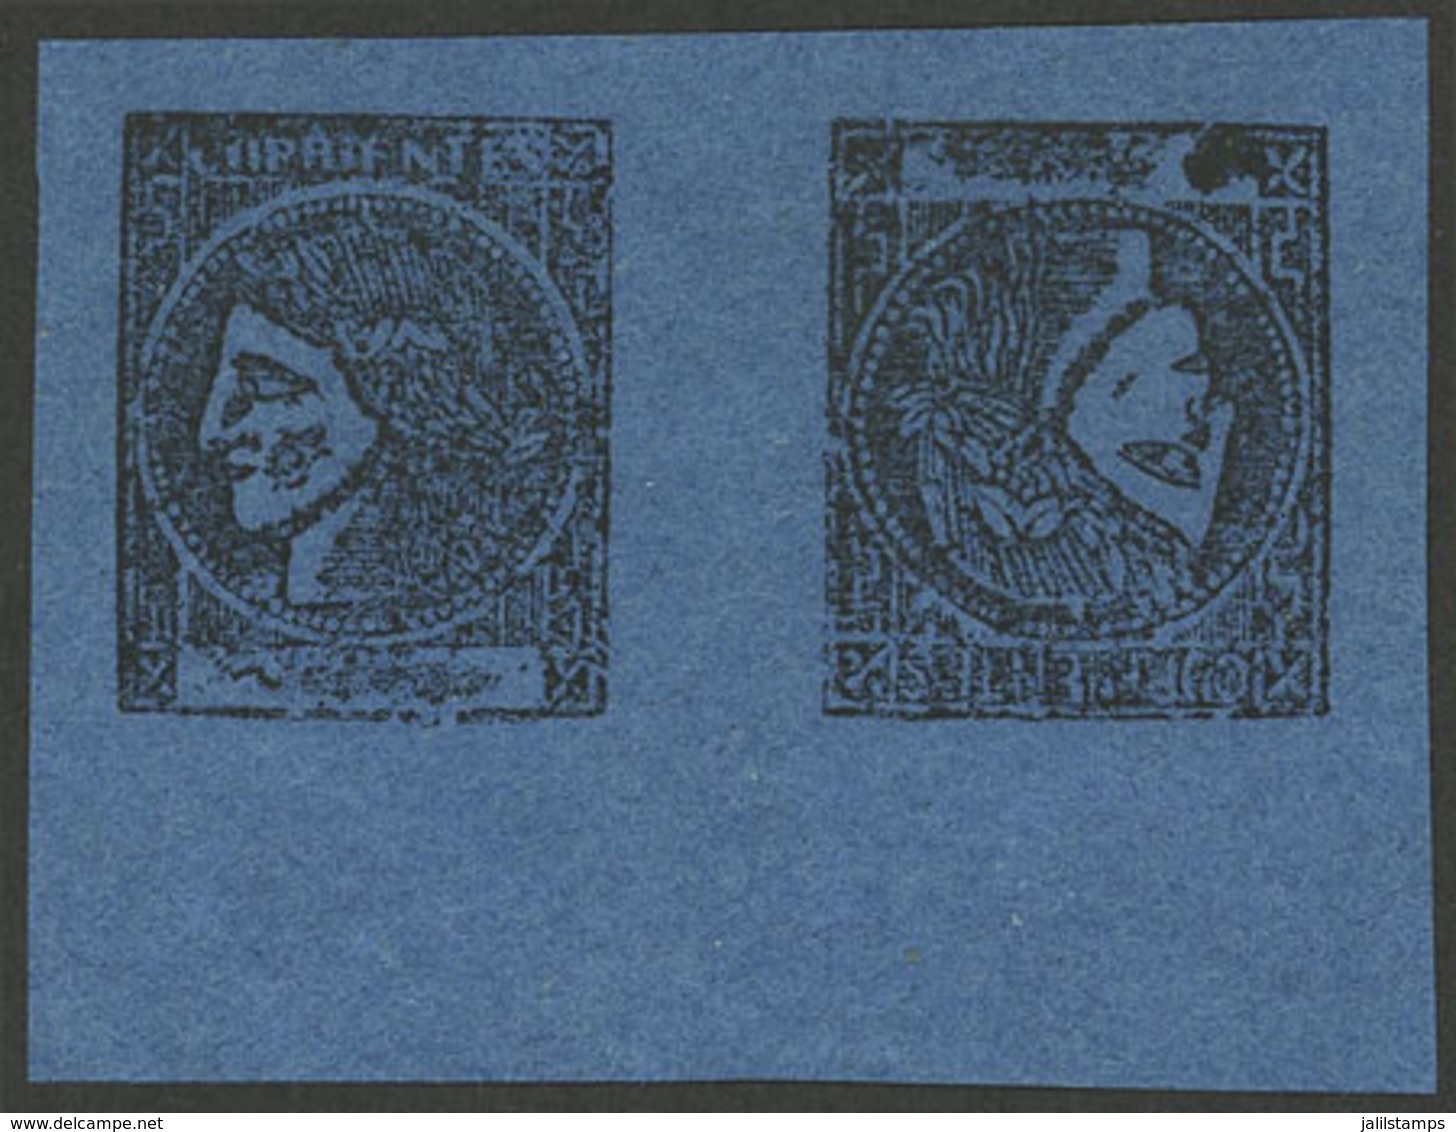 ARGENTINA: GJ.7T, 3c. Dark Blue, Tete-beche Pair, Types 8 And 4, Unused, Without Gum, VF - Corrientes (1856-1880)